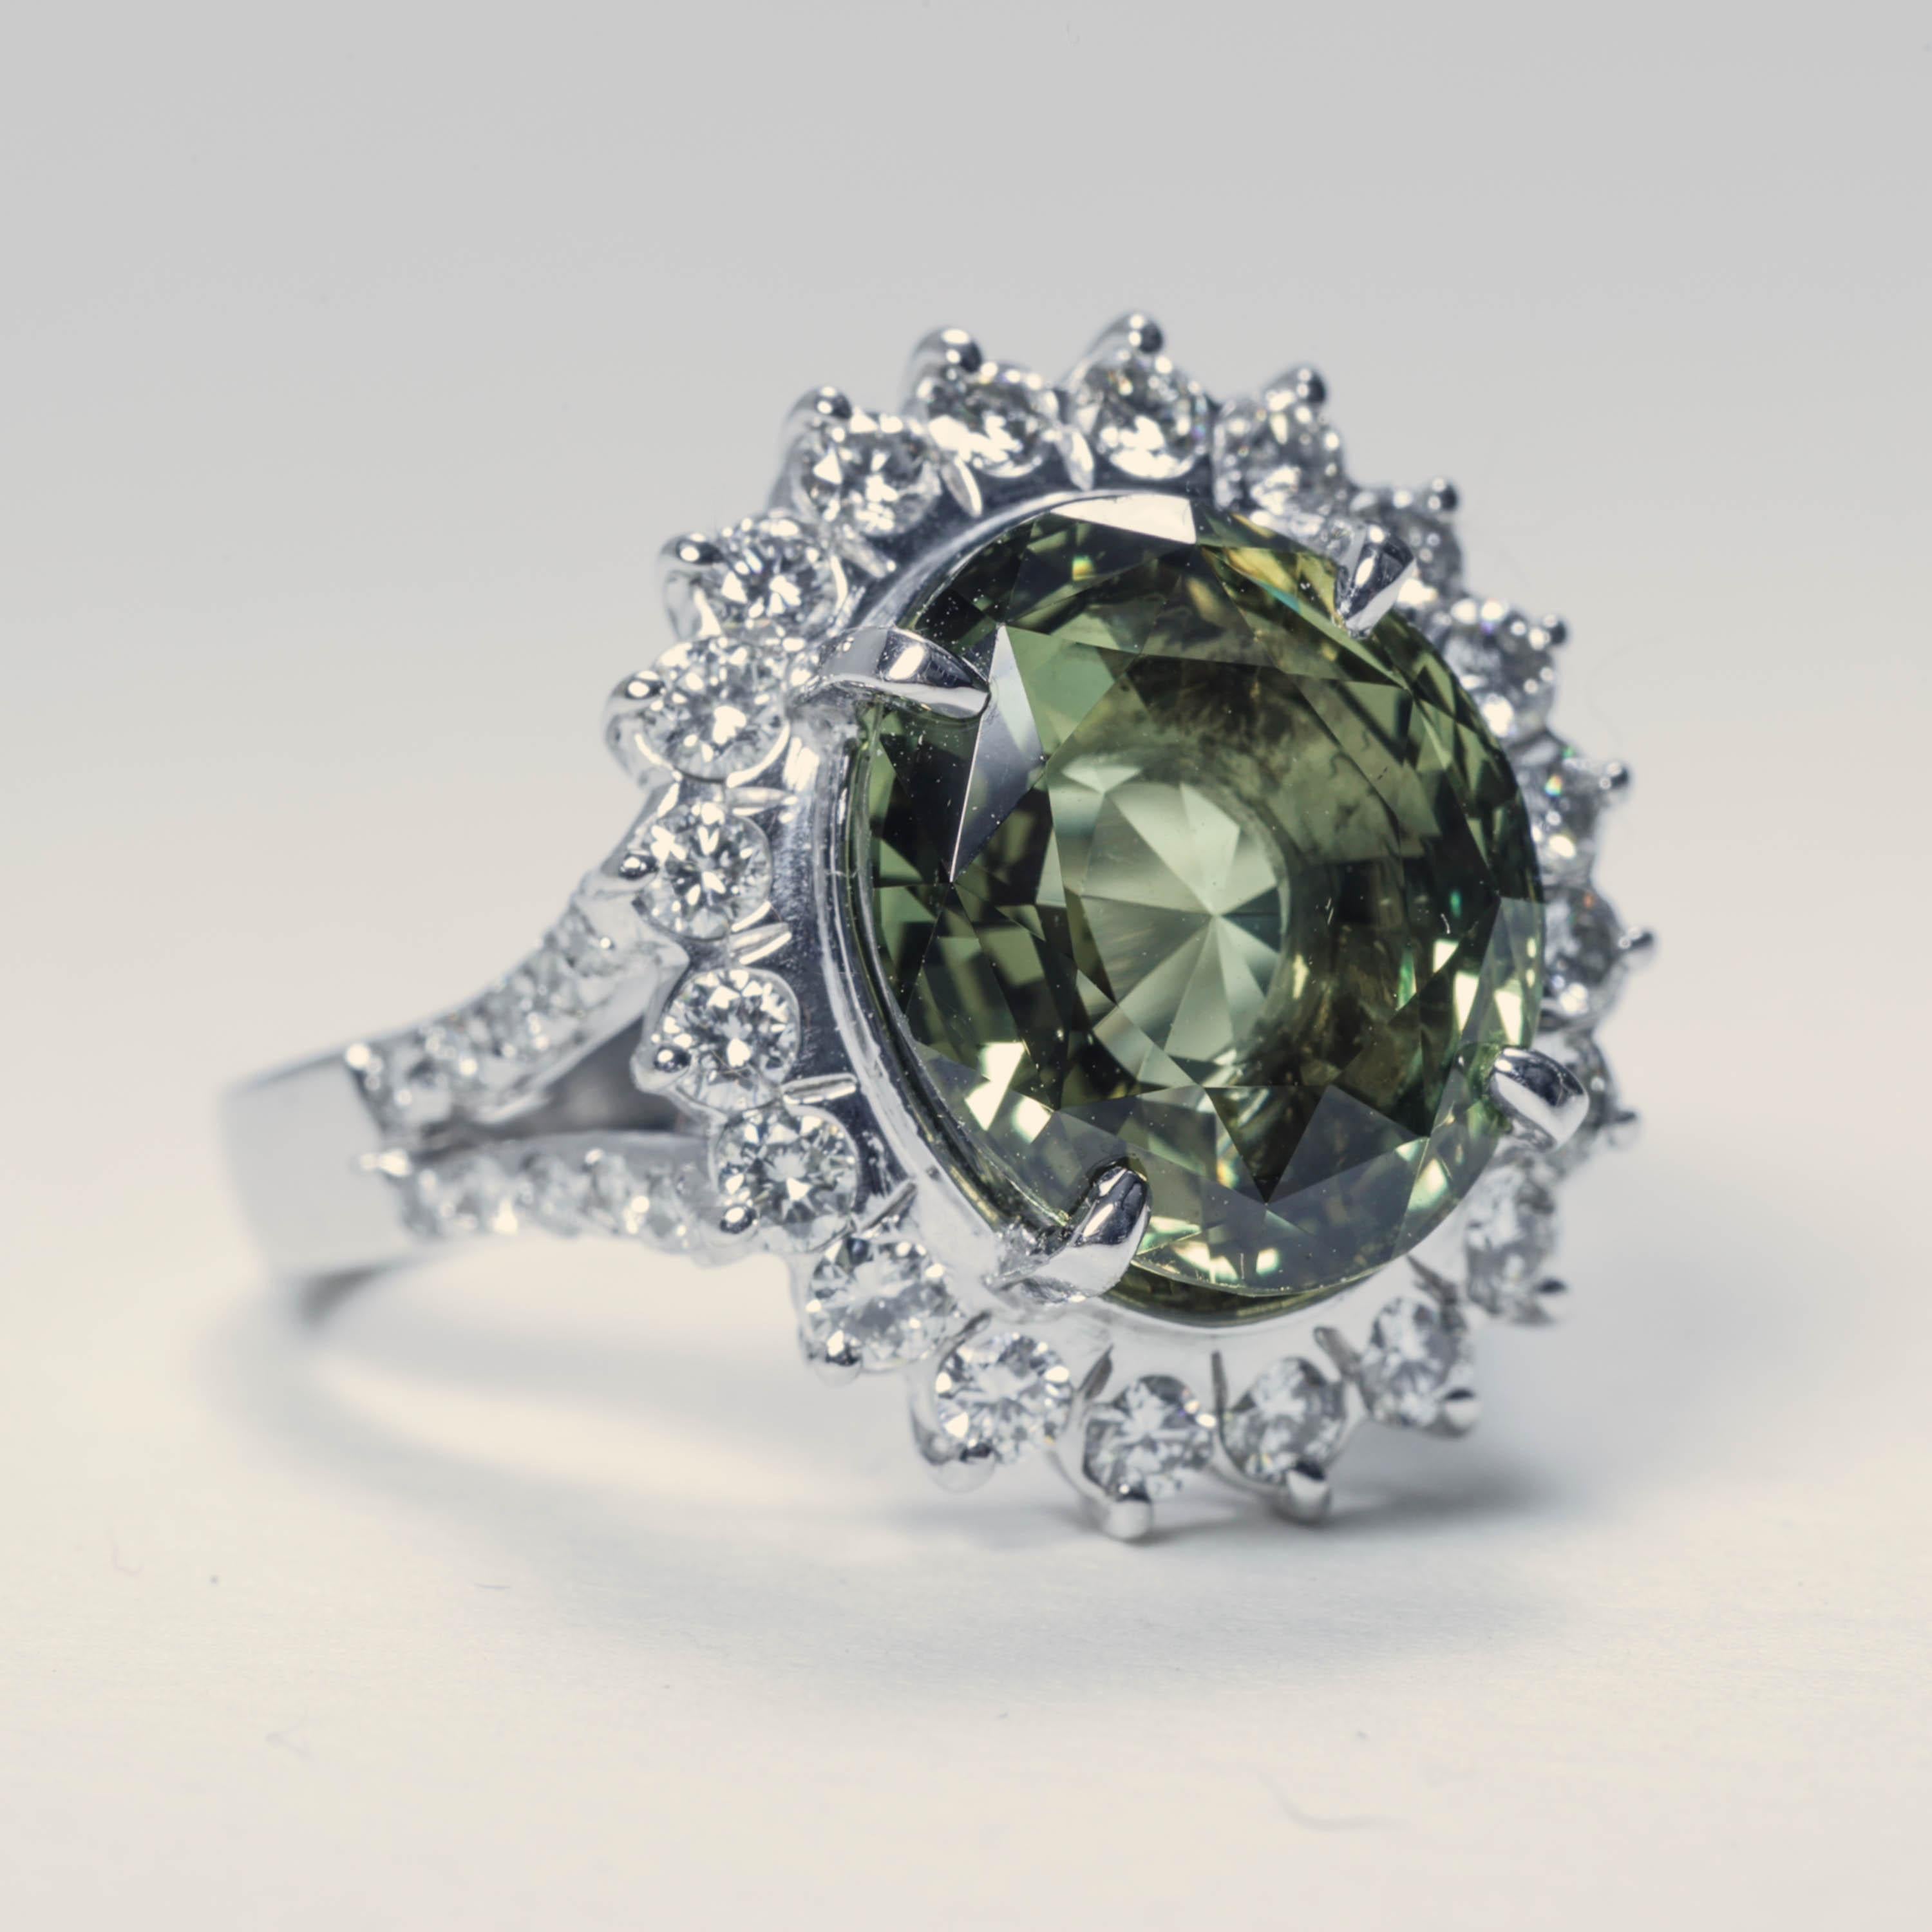 Alexandrite & Diamond Ring 7.35 Carats, Rare Color Change Gem Certified 10